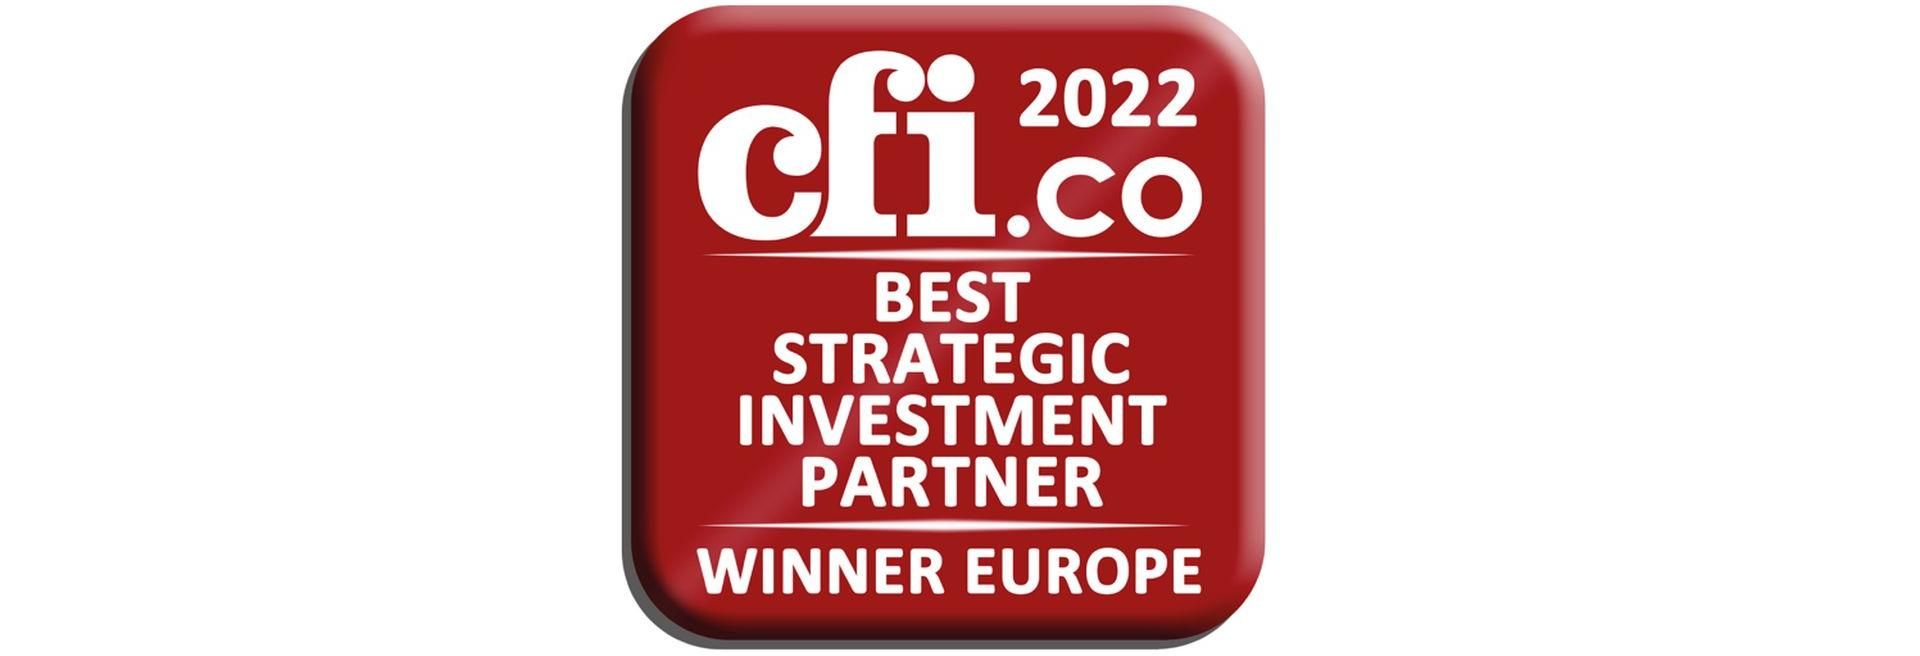 HIPA Wins Best Strategic Investment Partner Europe 2022 Award